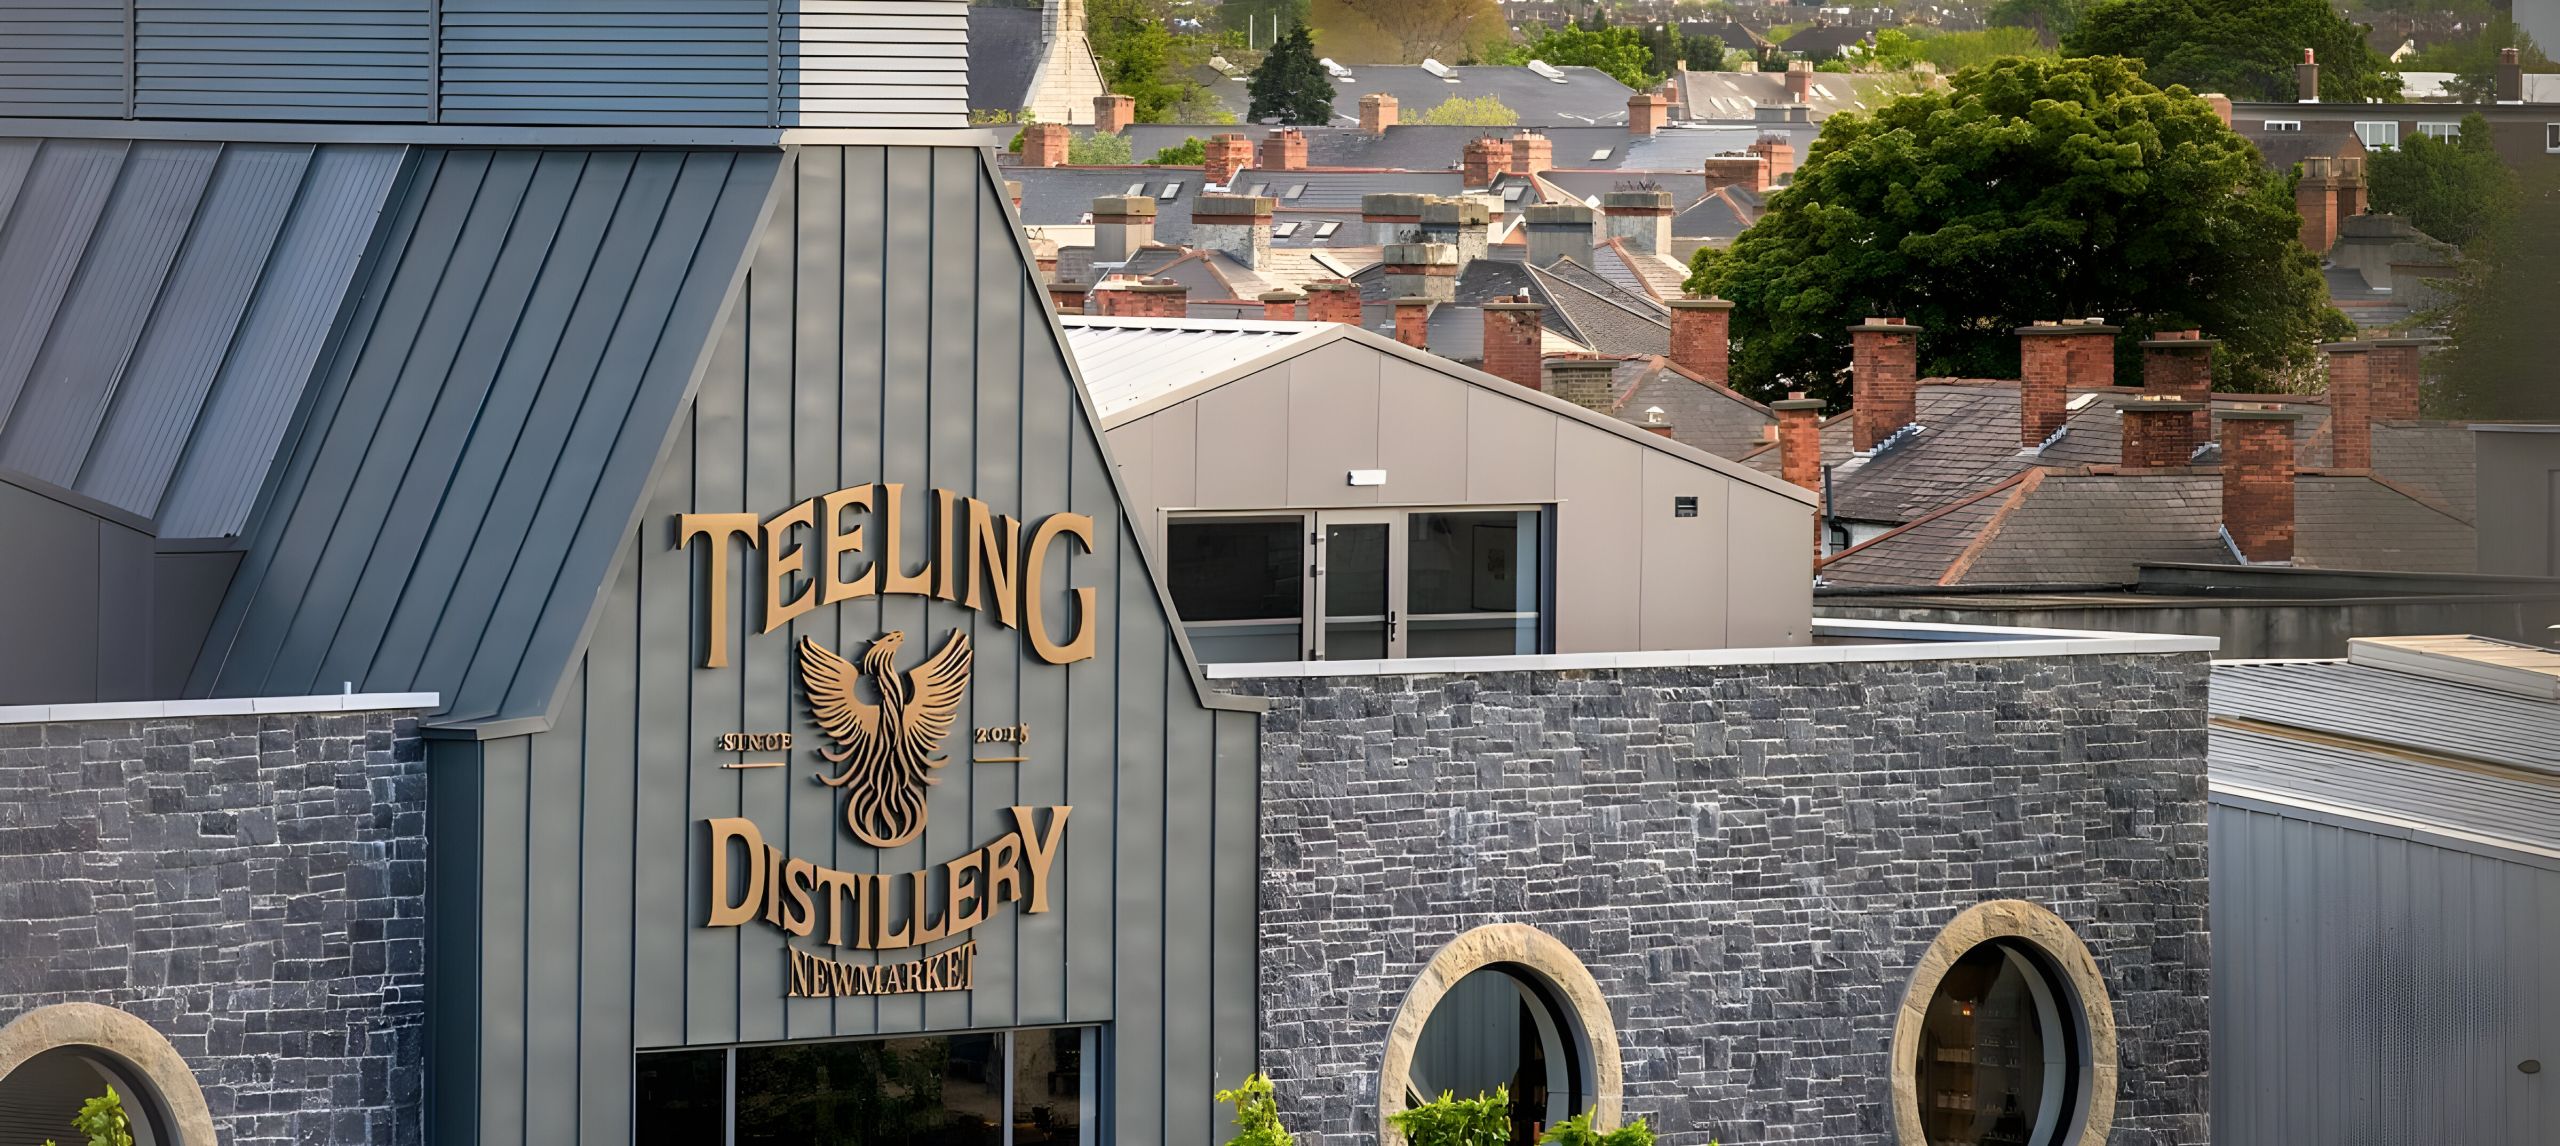 Teeling whiskey distillery shot